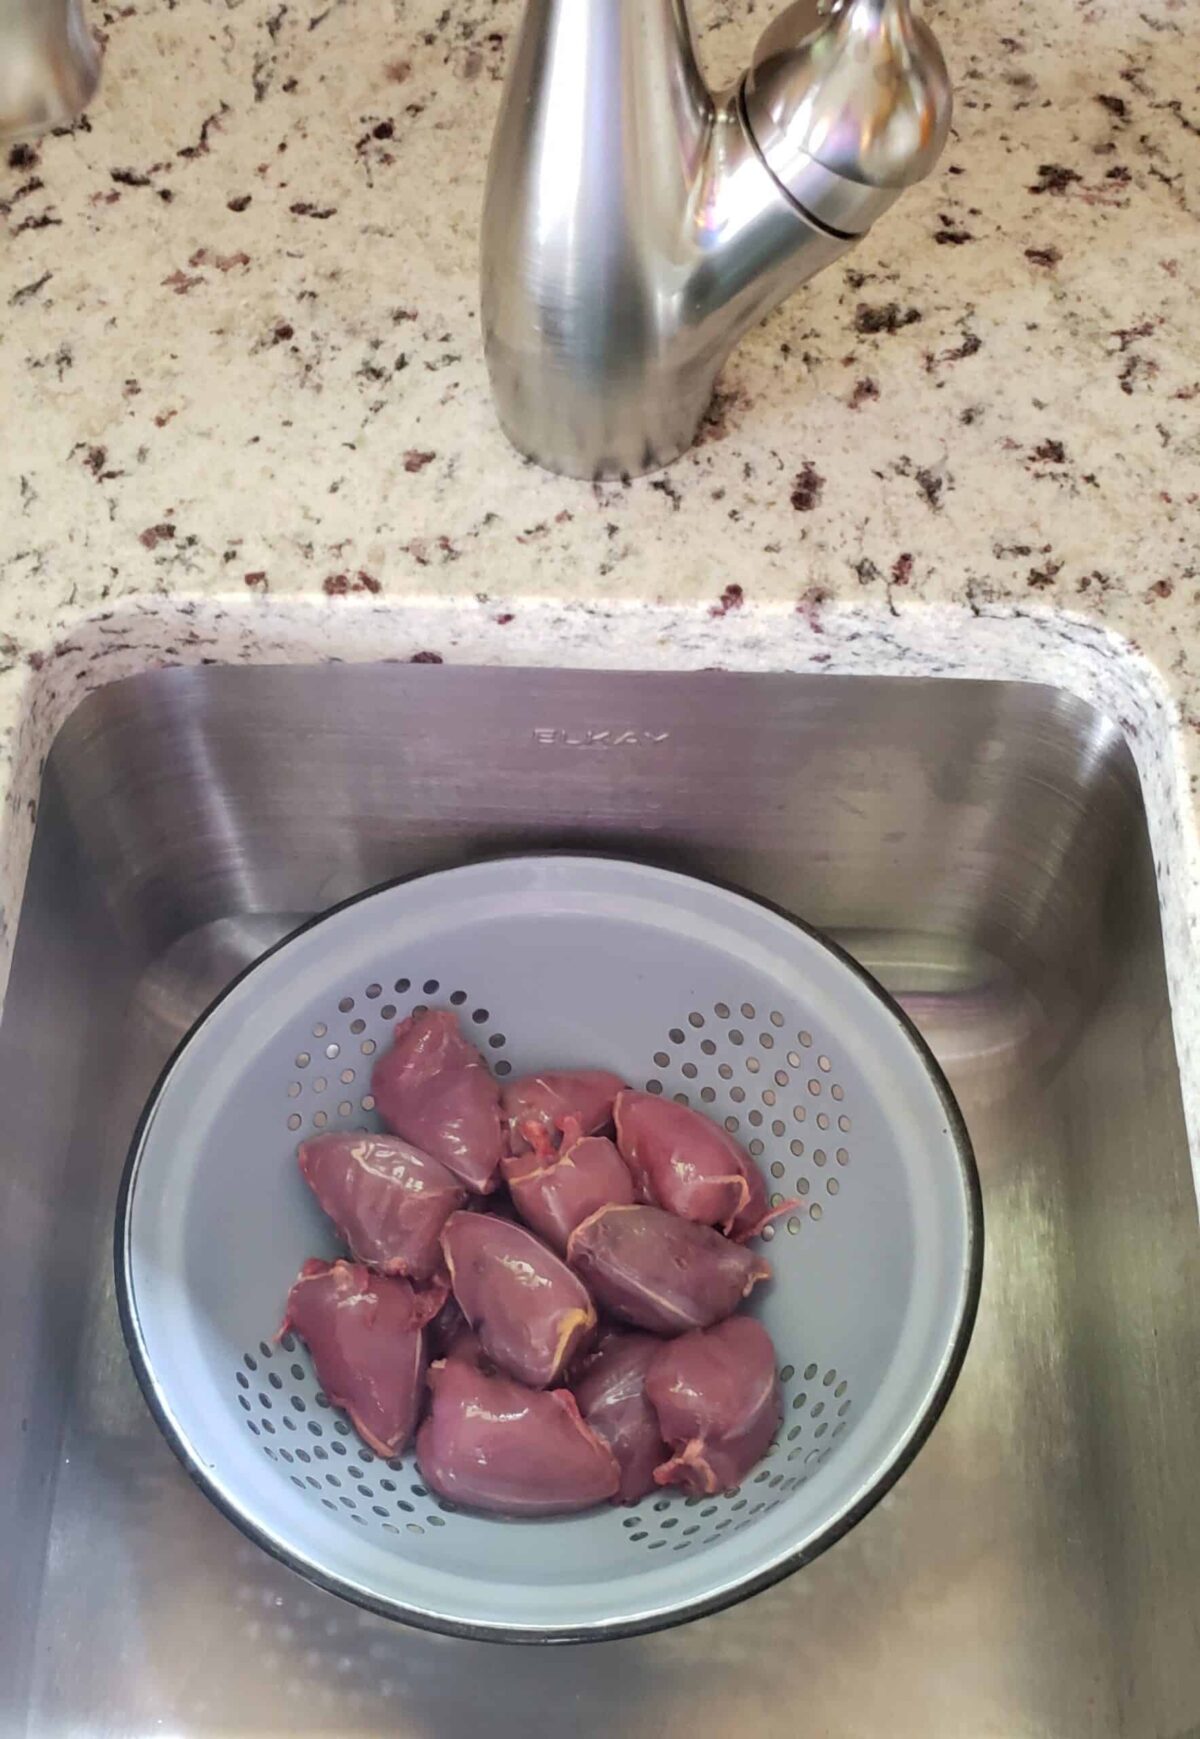 Uncooked dove breasts in colander in sink